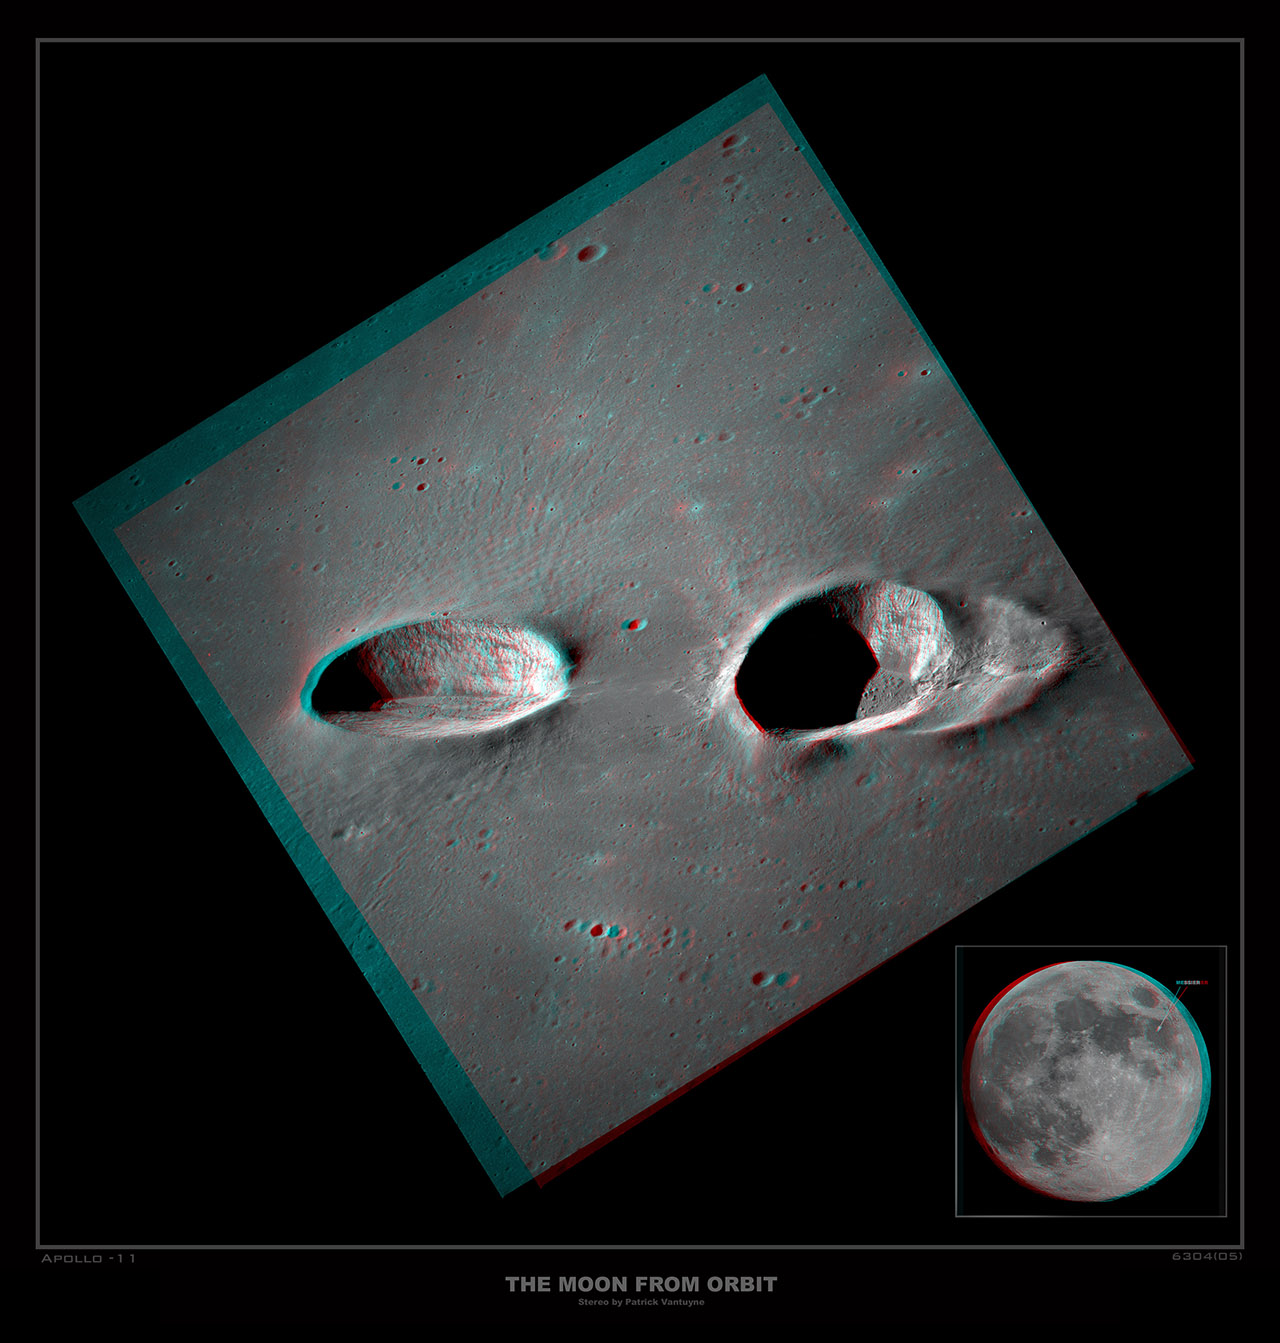 MessierCrater3d_vantuyne (1)